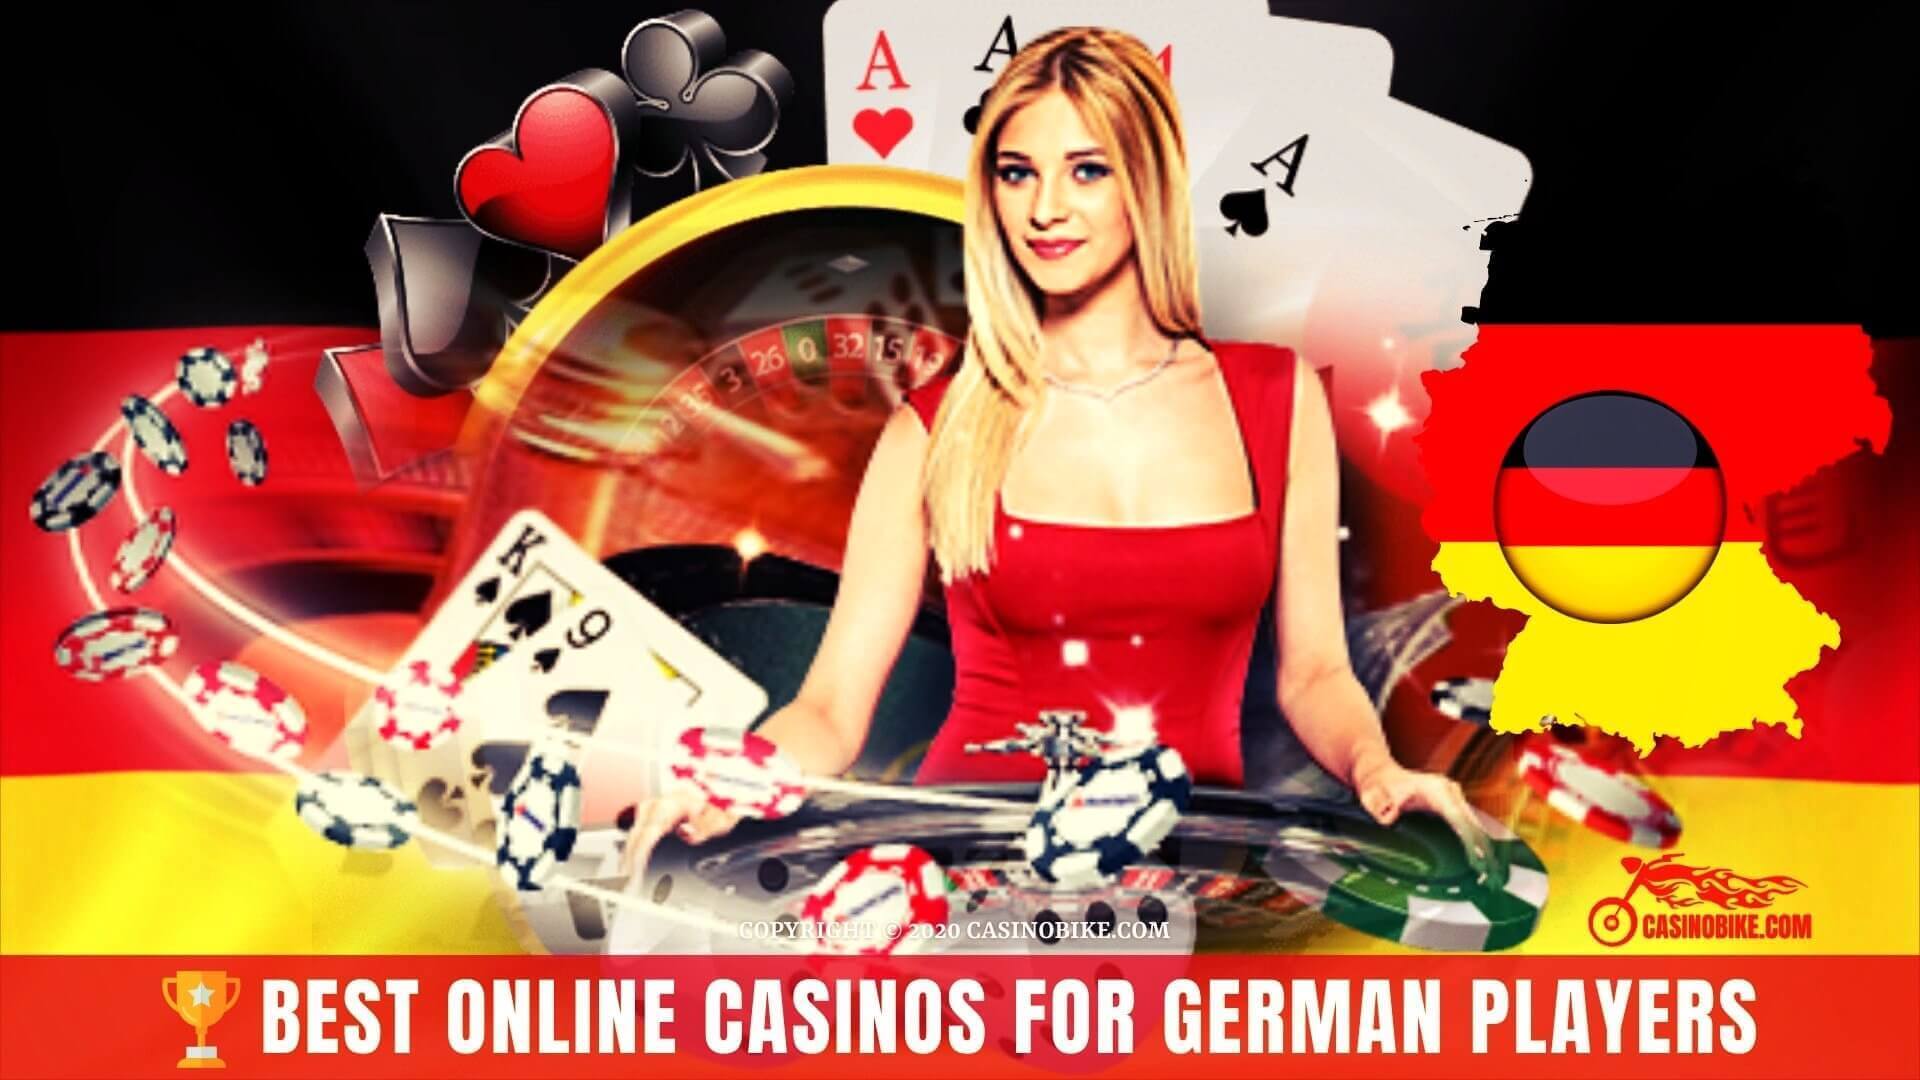 Sexy Bet 365 Casino